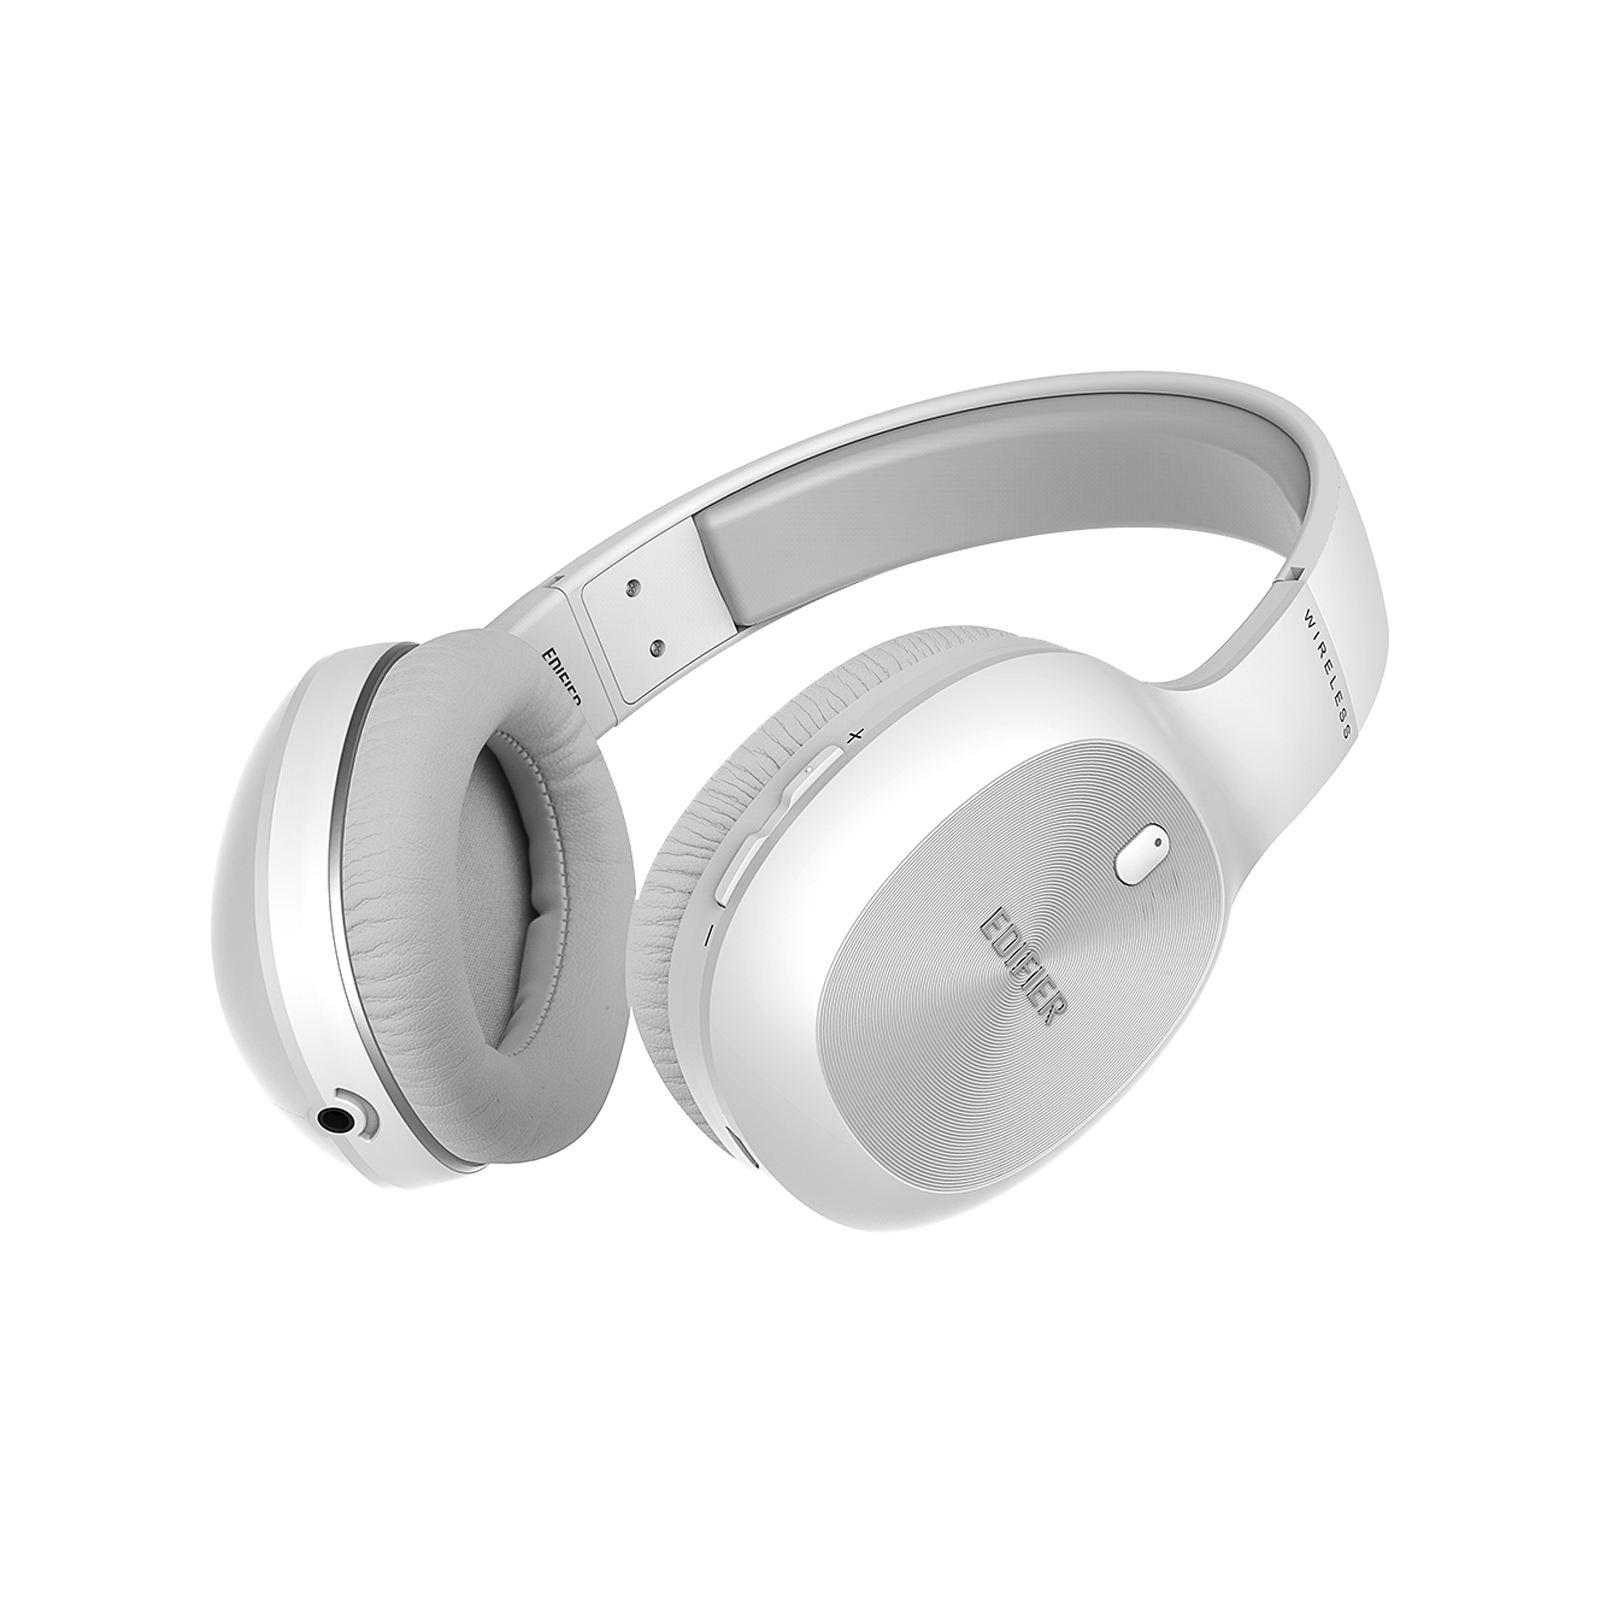 W800BT Plus Wireless Bluetooth Stereo Headphones